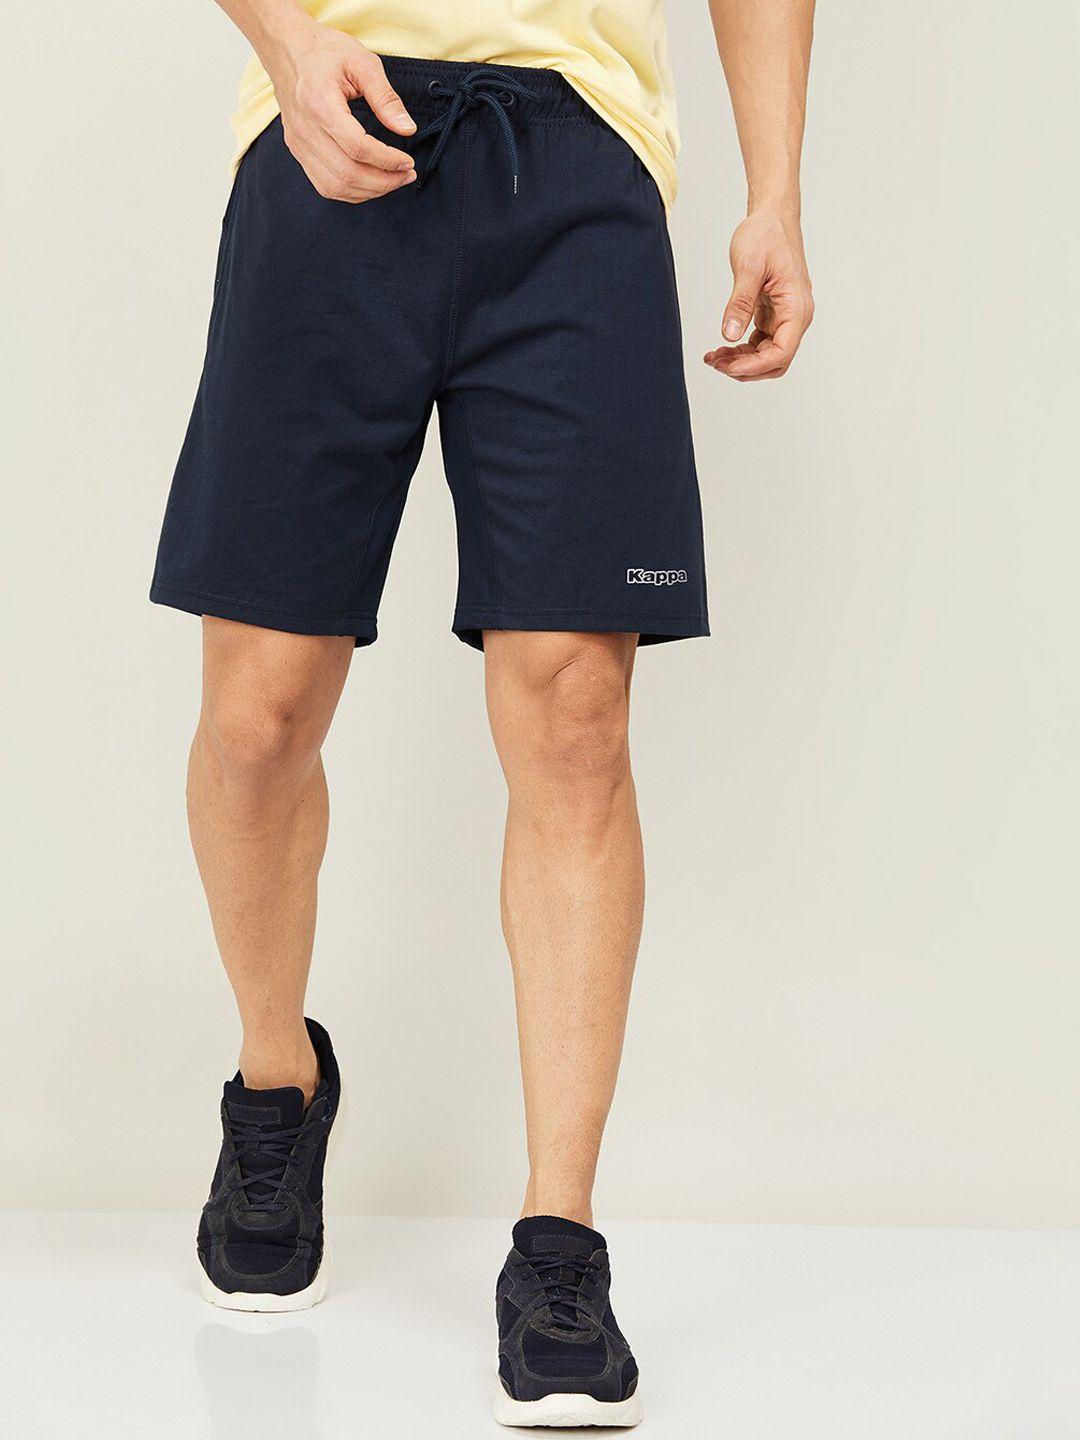 kappa-men-mid-raise-sports-shorts